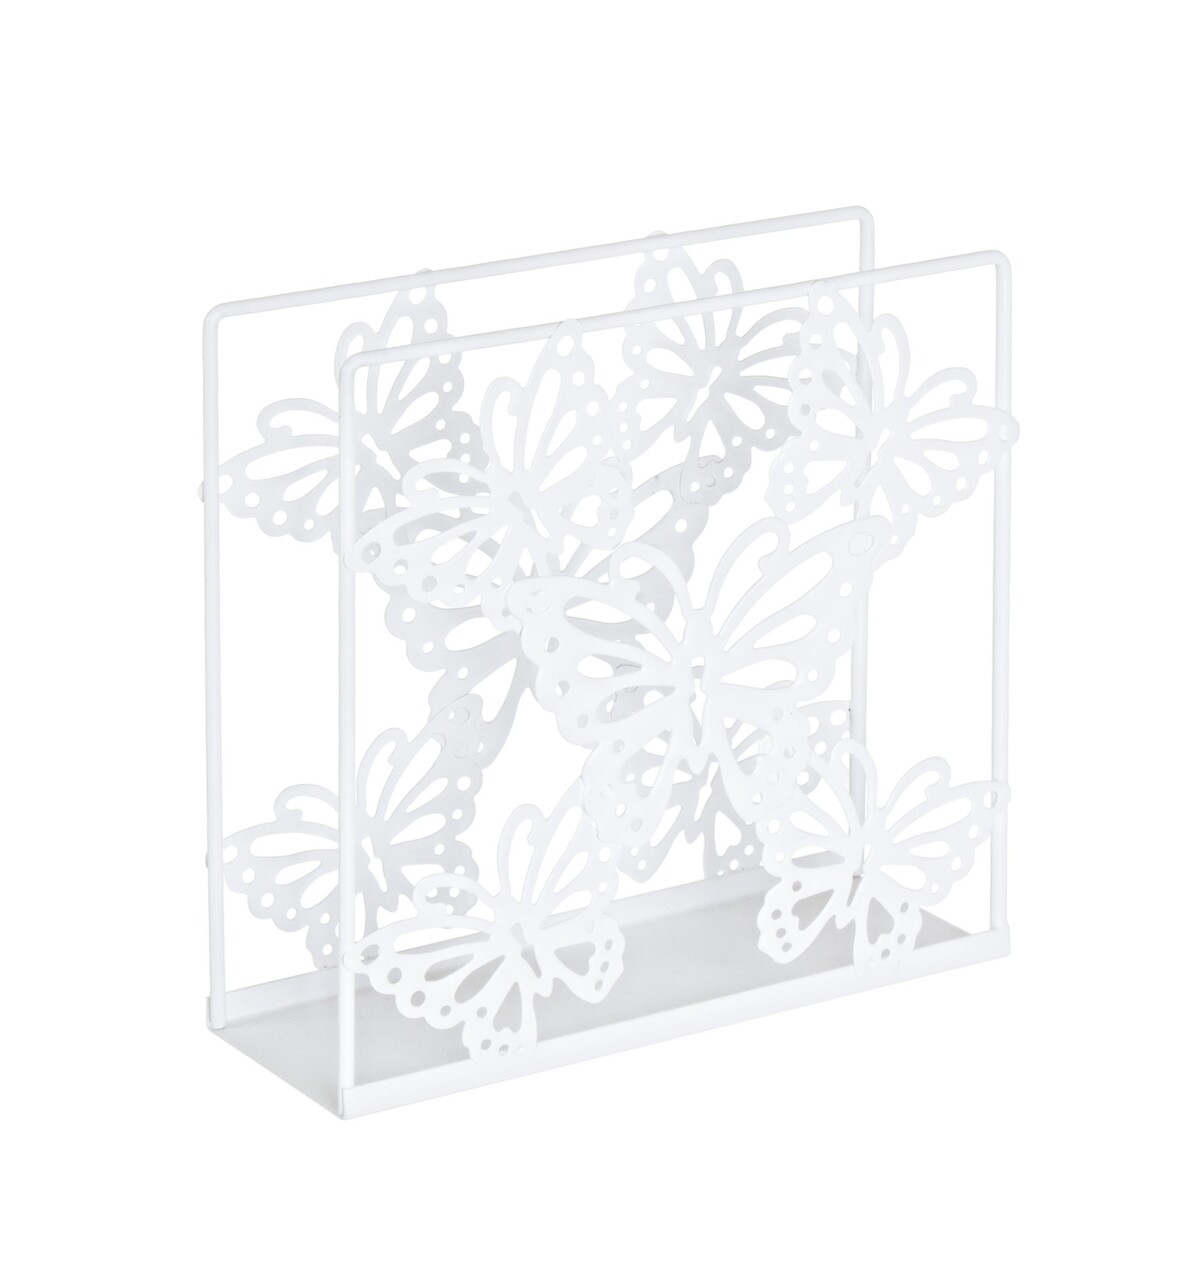 Suport pentru servetele, Butterfly White, Bizzotto, 14x5x14 cm, metal